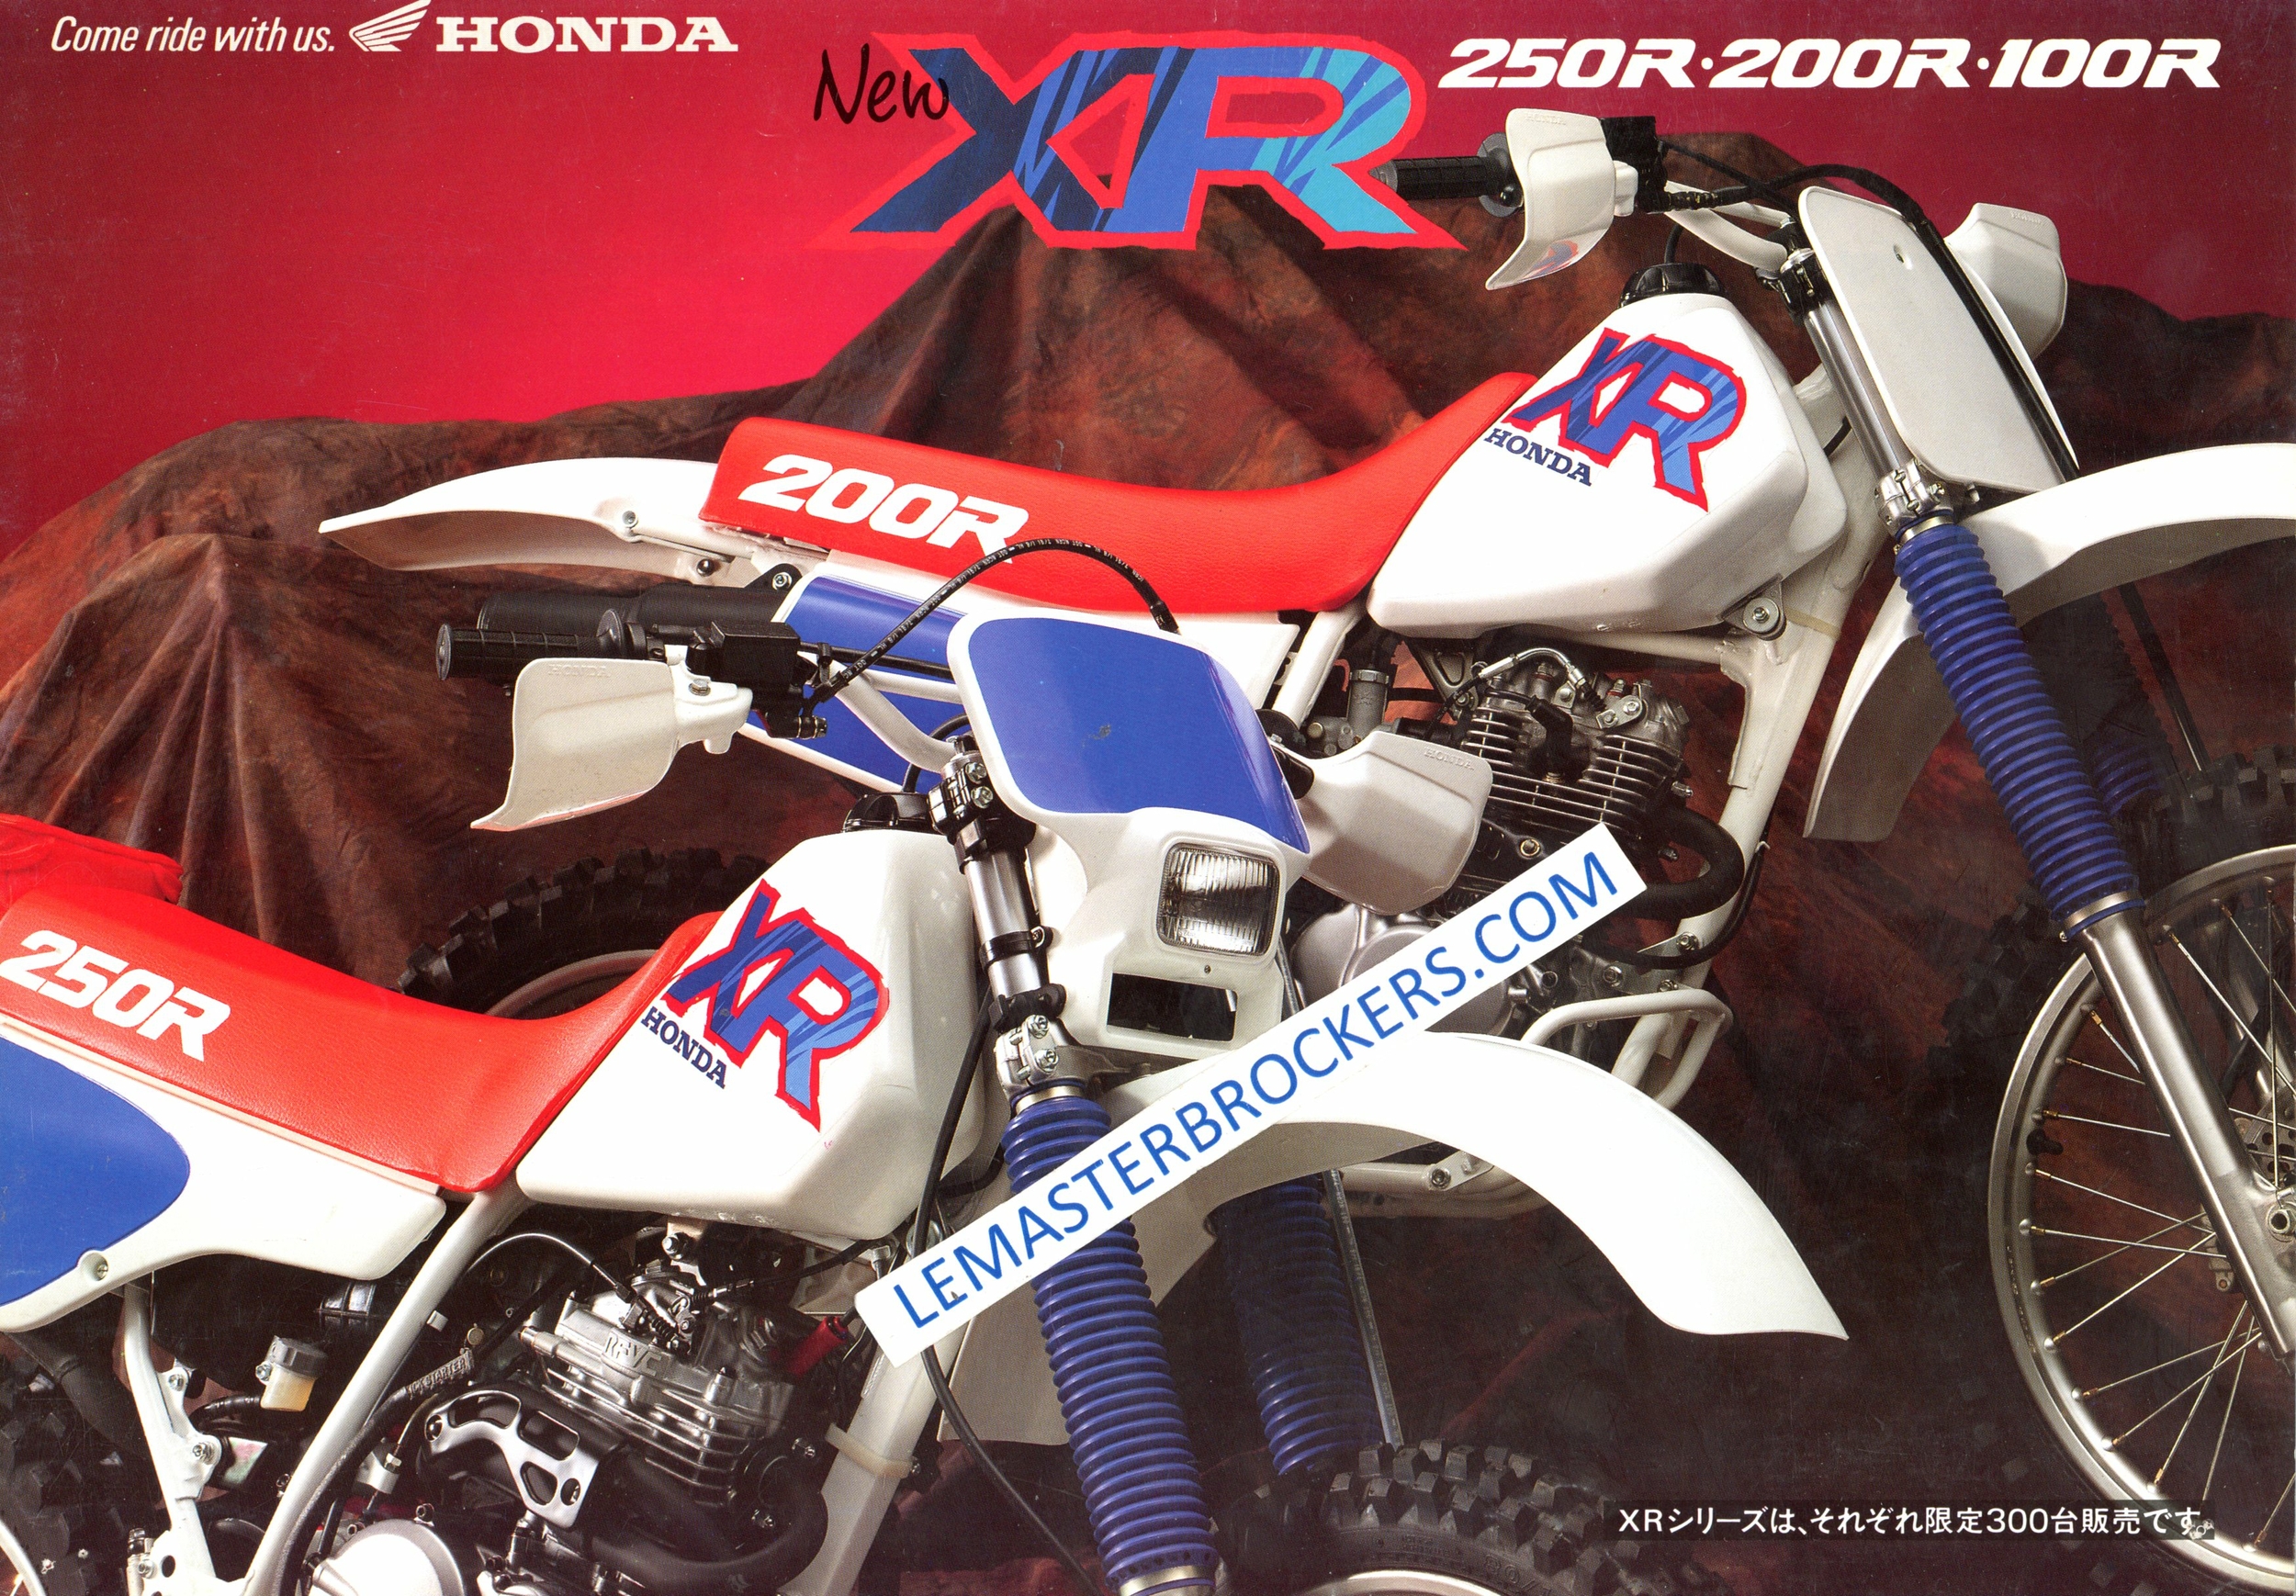 HONDA XR 250R 200R 100R - BROCHURE MOTO EN JAPONAIS